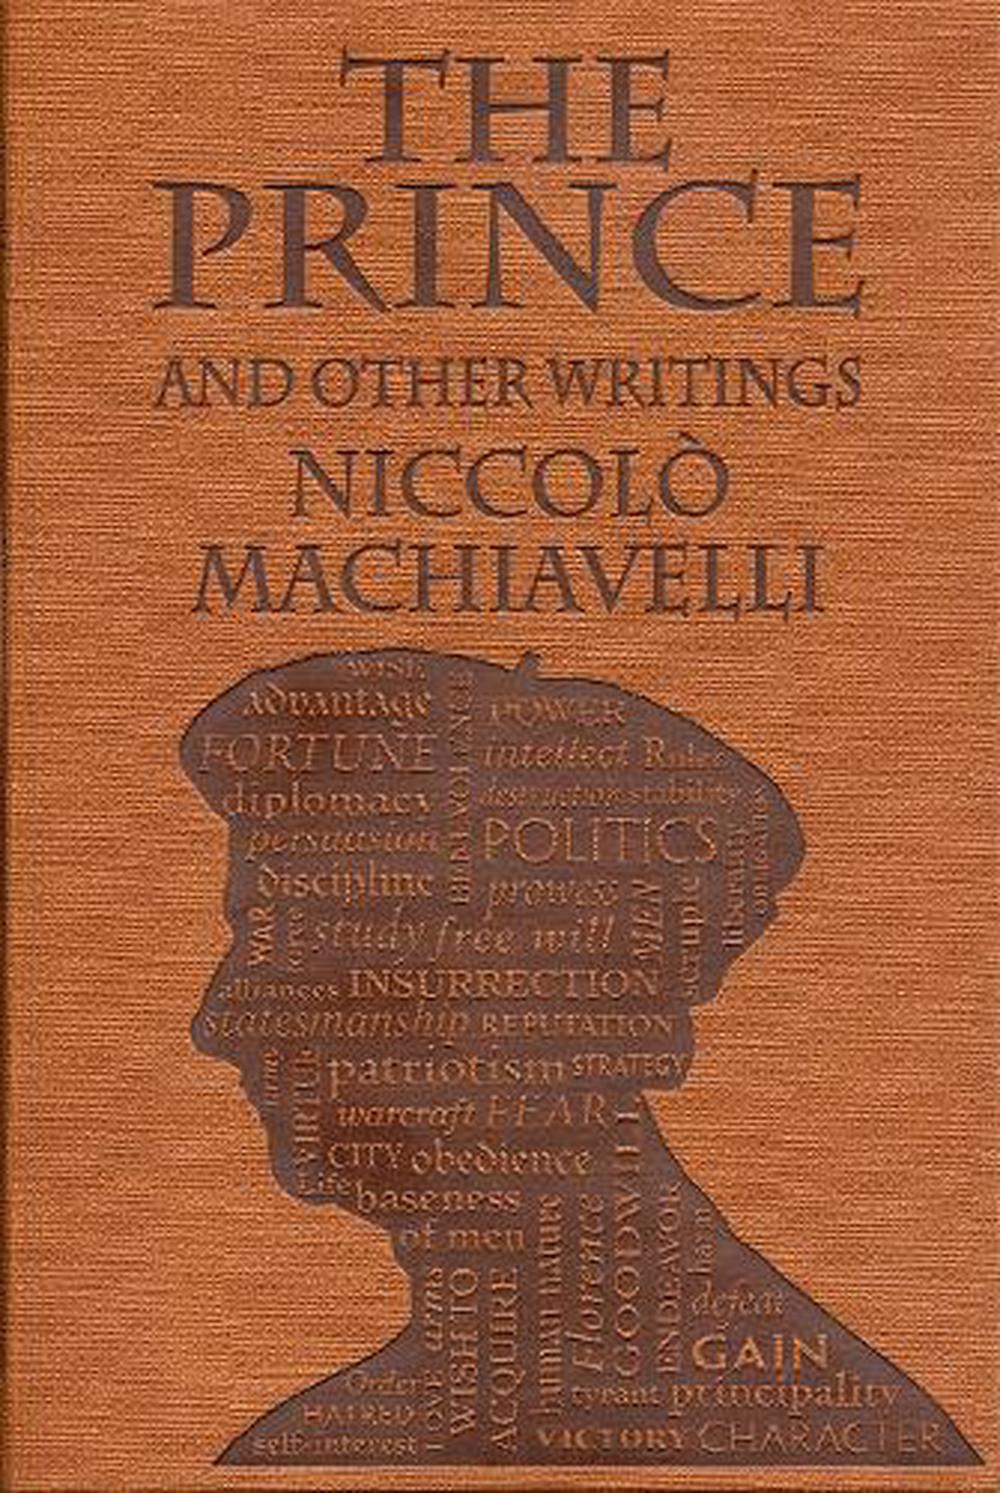 the prince a new translation backgrounds interpretations niccolo machiavelli